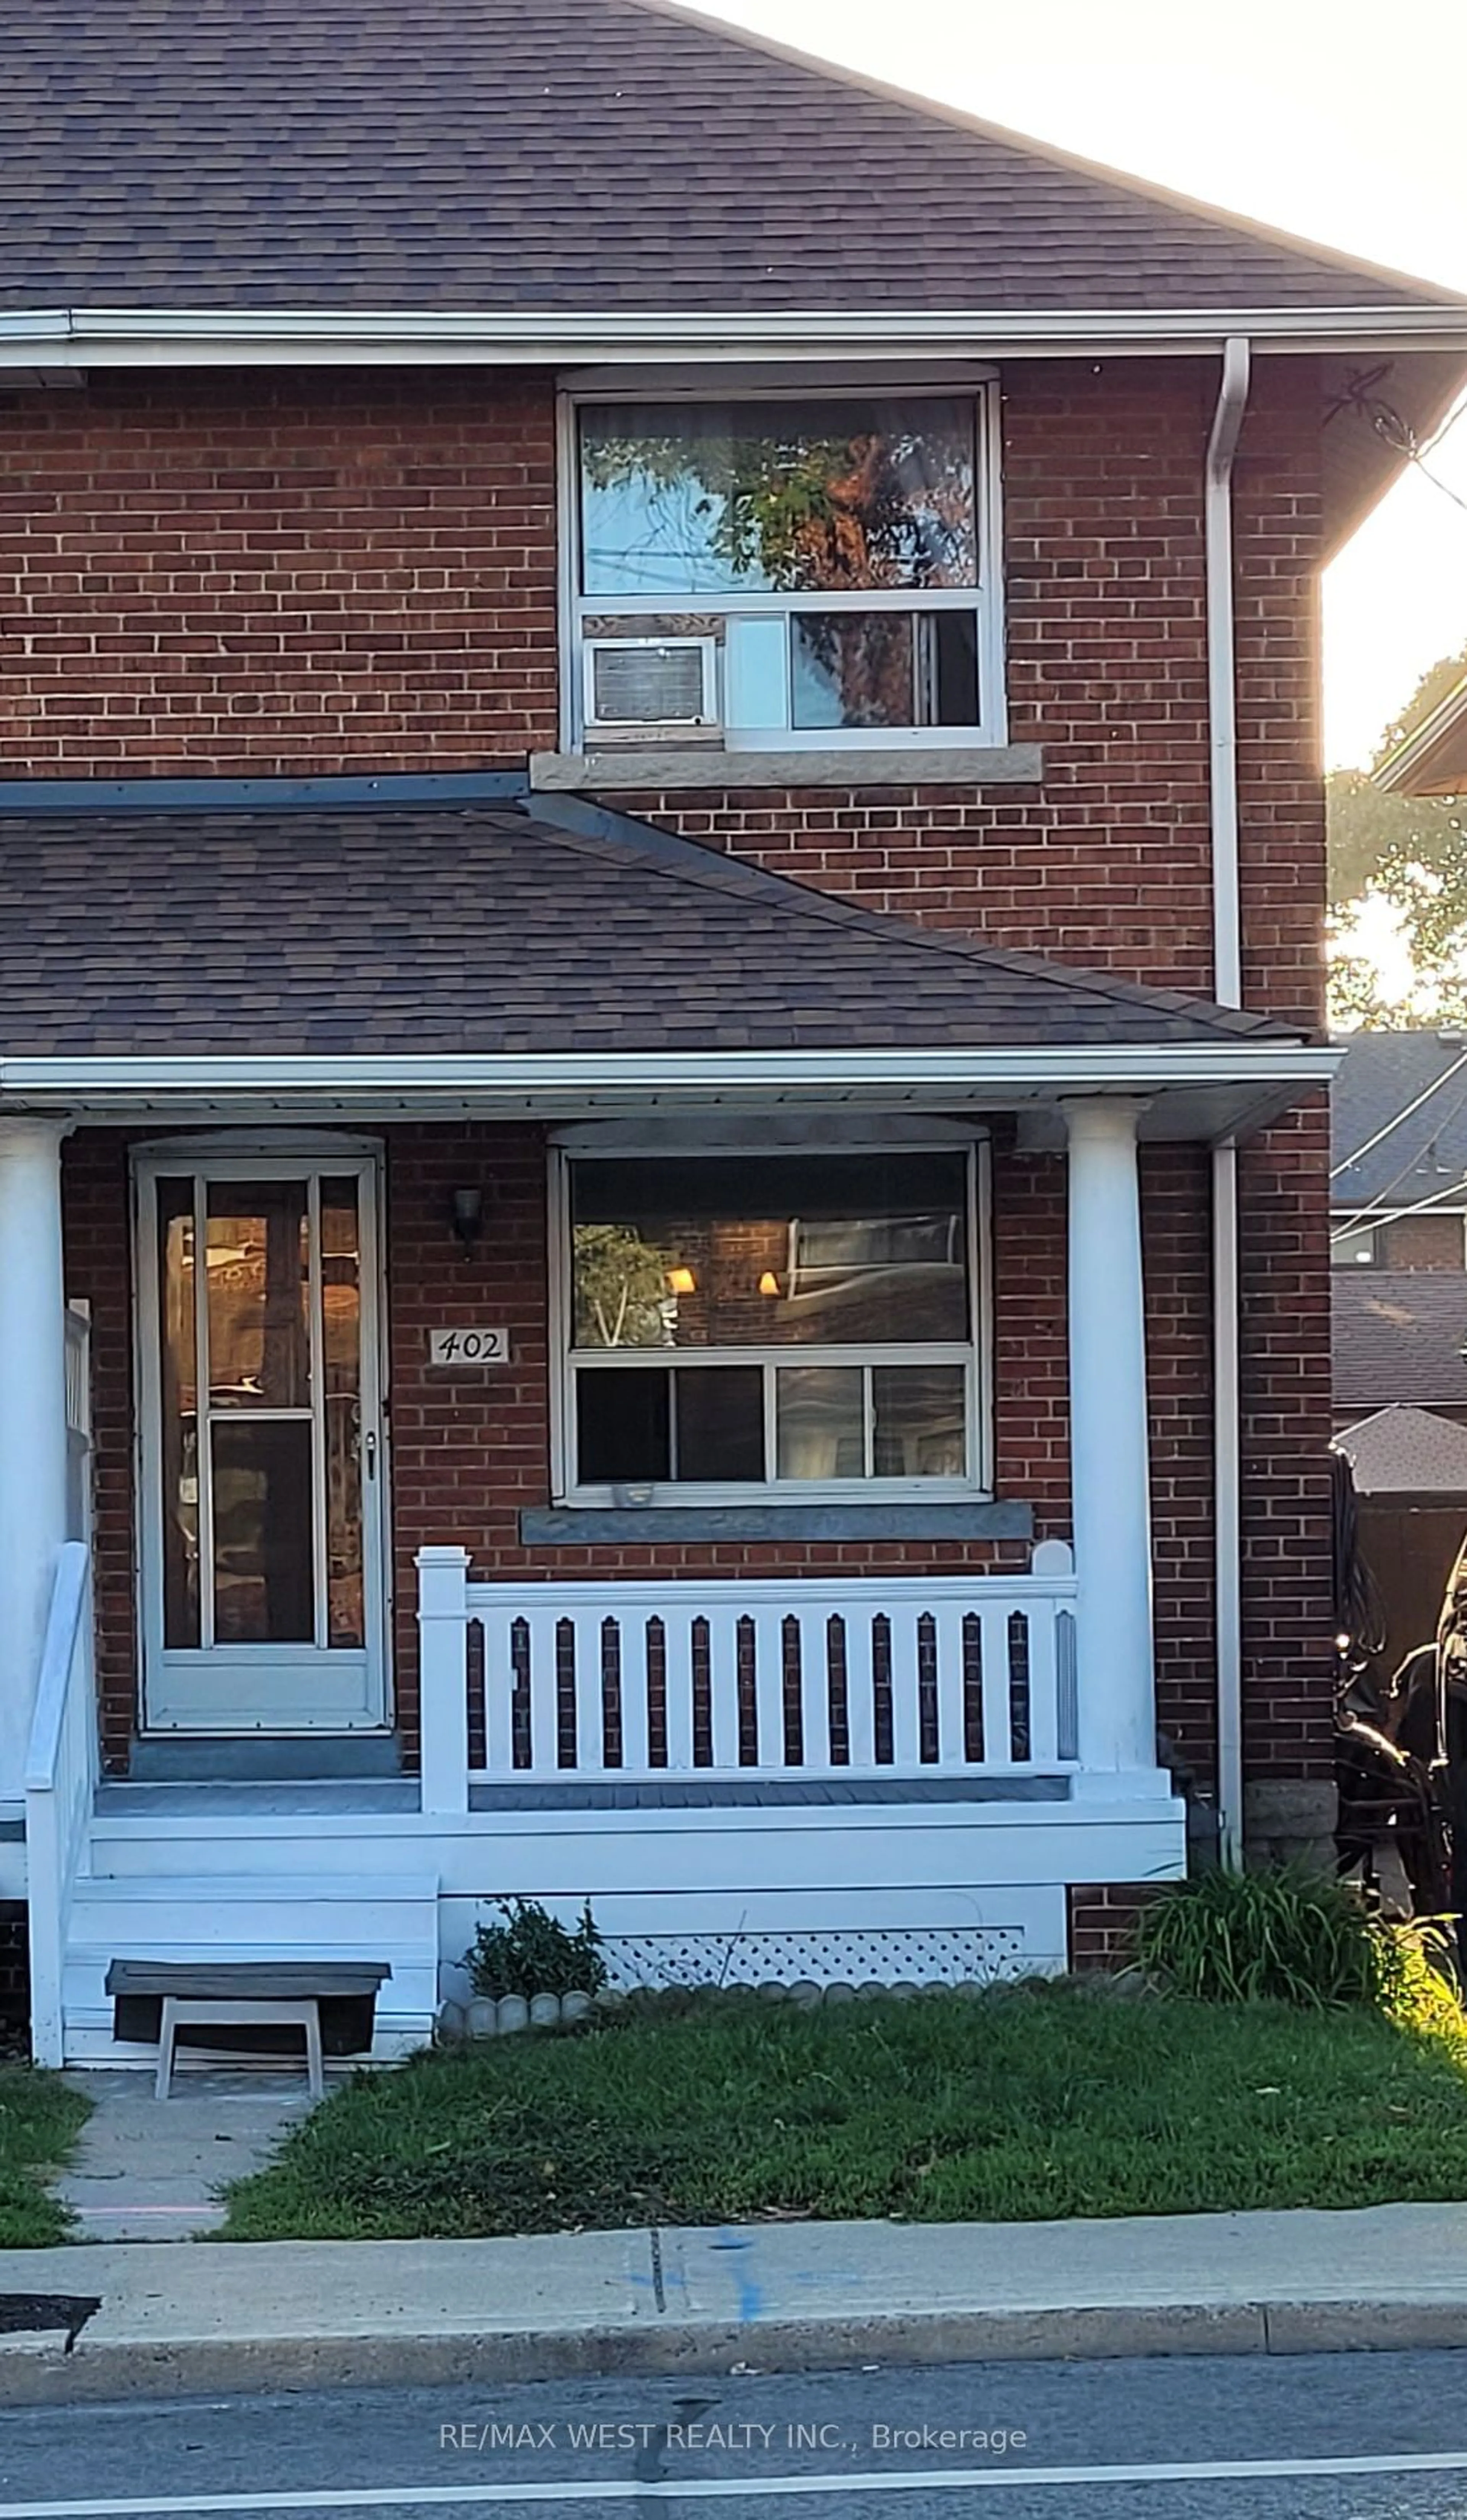 Home with brick exterior material for 402 Christie St, Toronto Ontario M6G 3C6